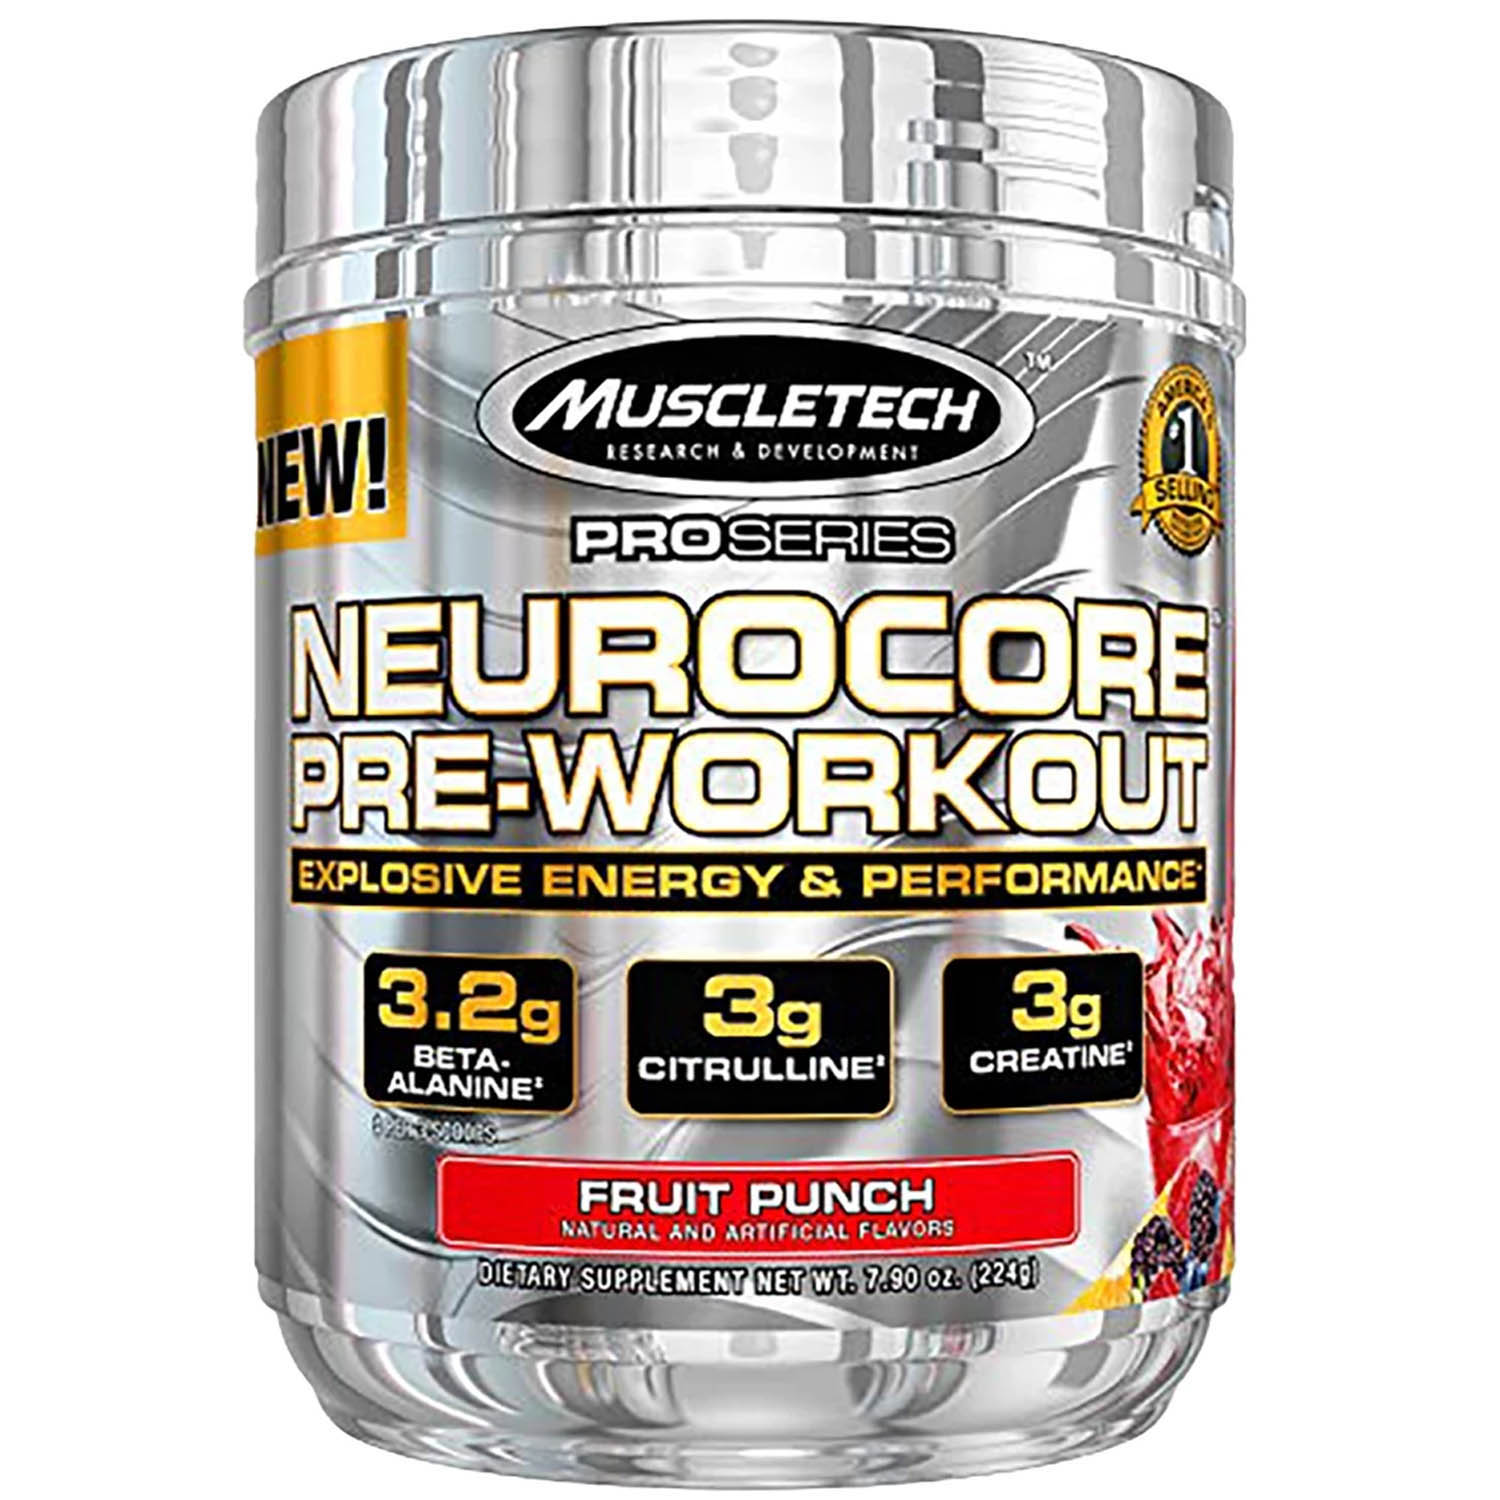 Buy Muscletech Neurocore Pre-Workout Fruit Punch Flavour Powder, 224 gm Online